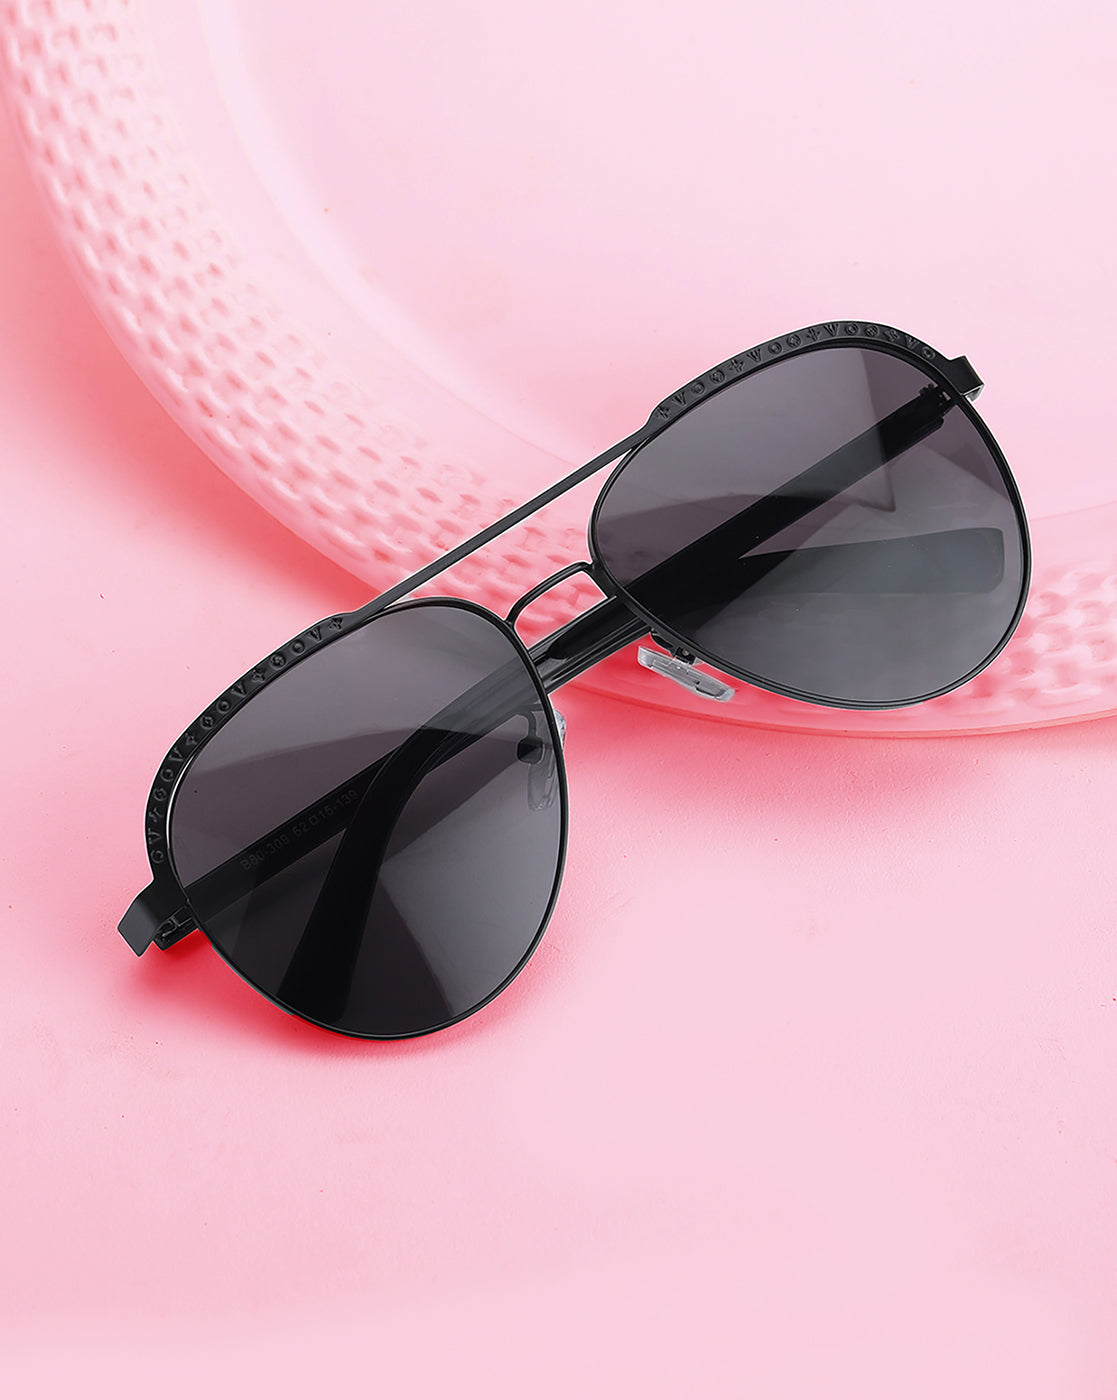 Carlton London Aviator Sunglasses With Uv Protected Lens For Women